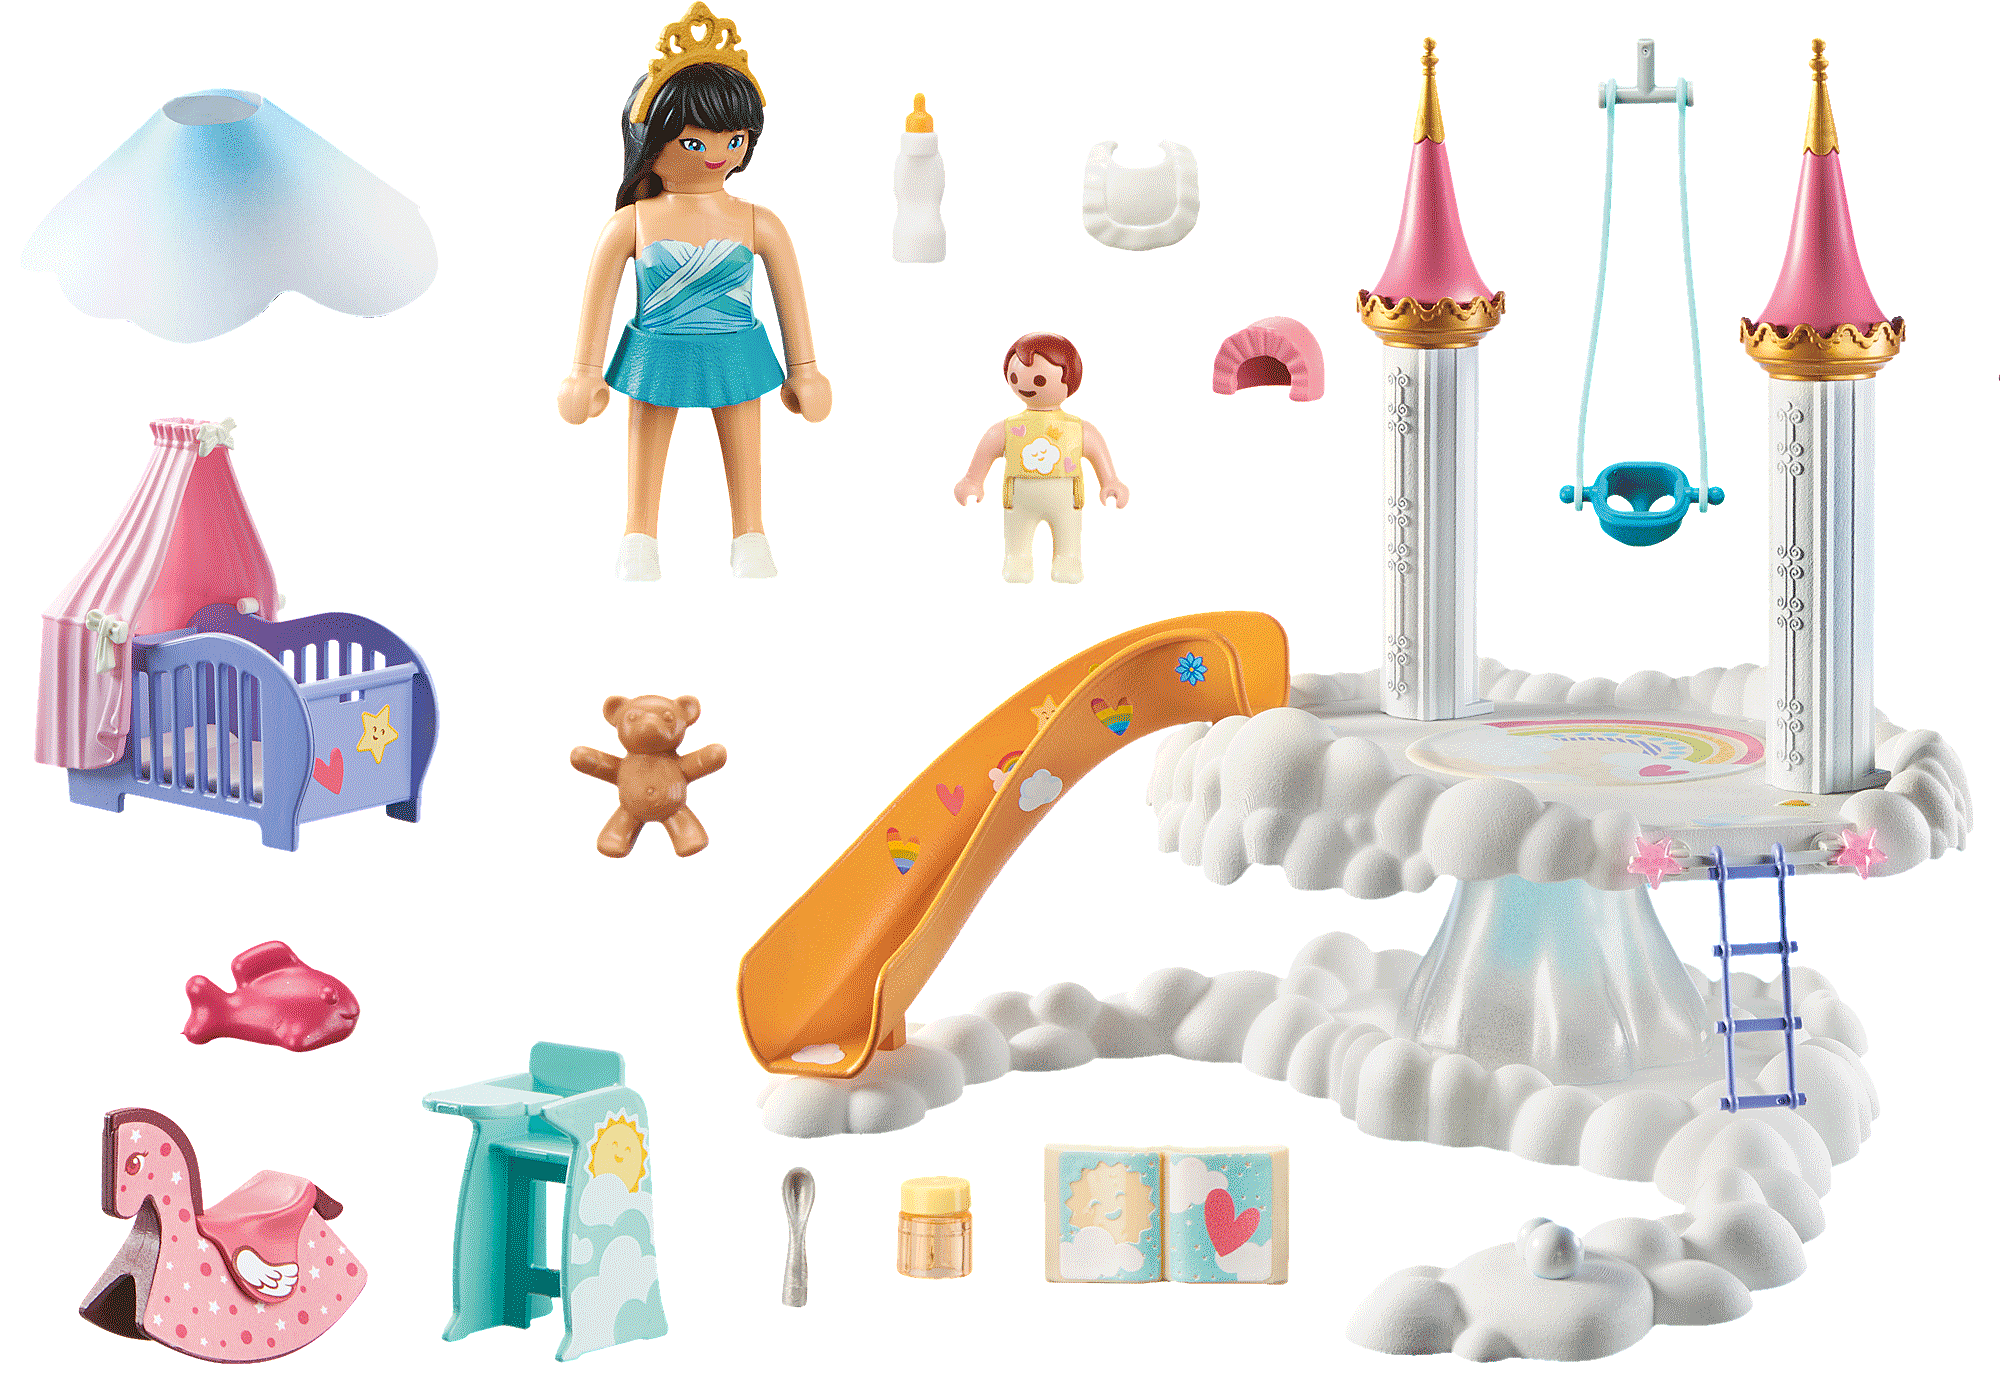 Starter Pack Sirènes et arc-en-ciel Playmobil Magic 71379 - La